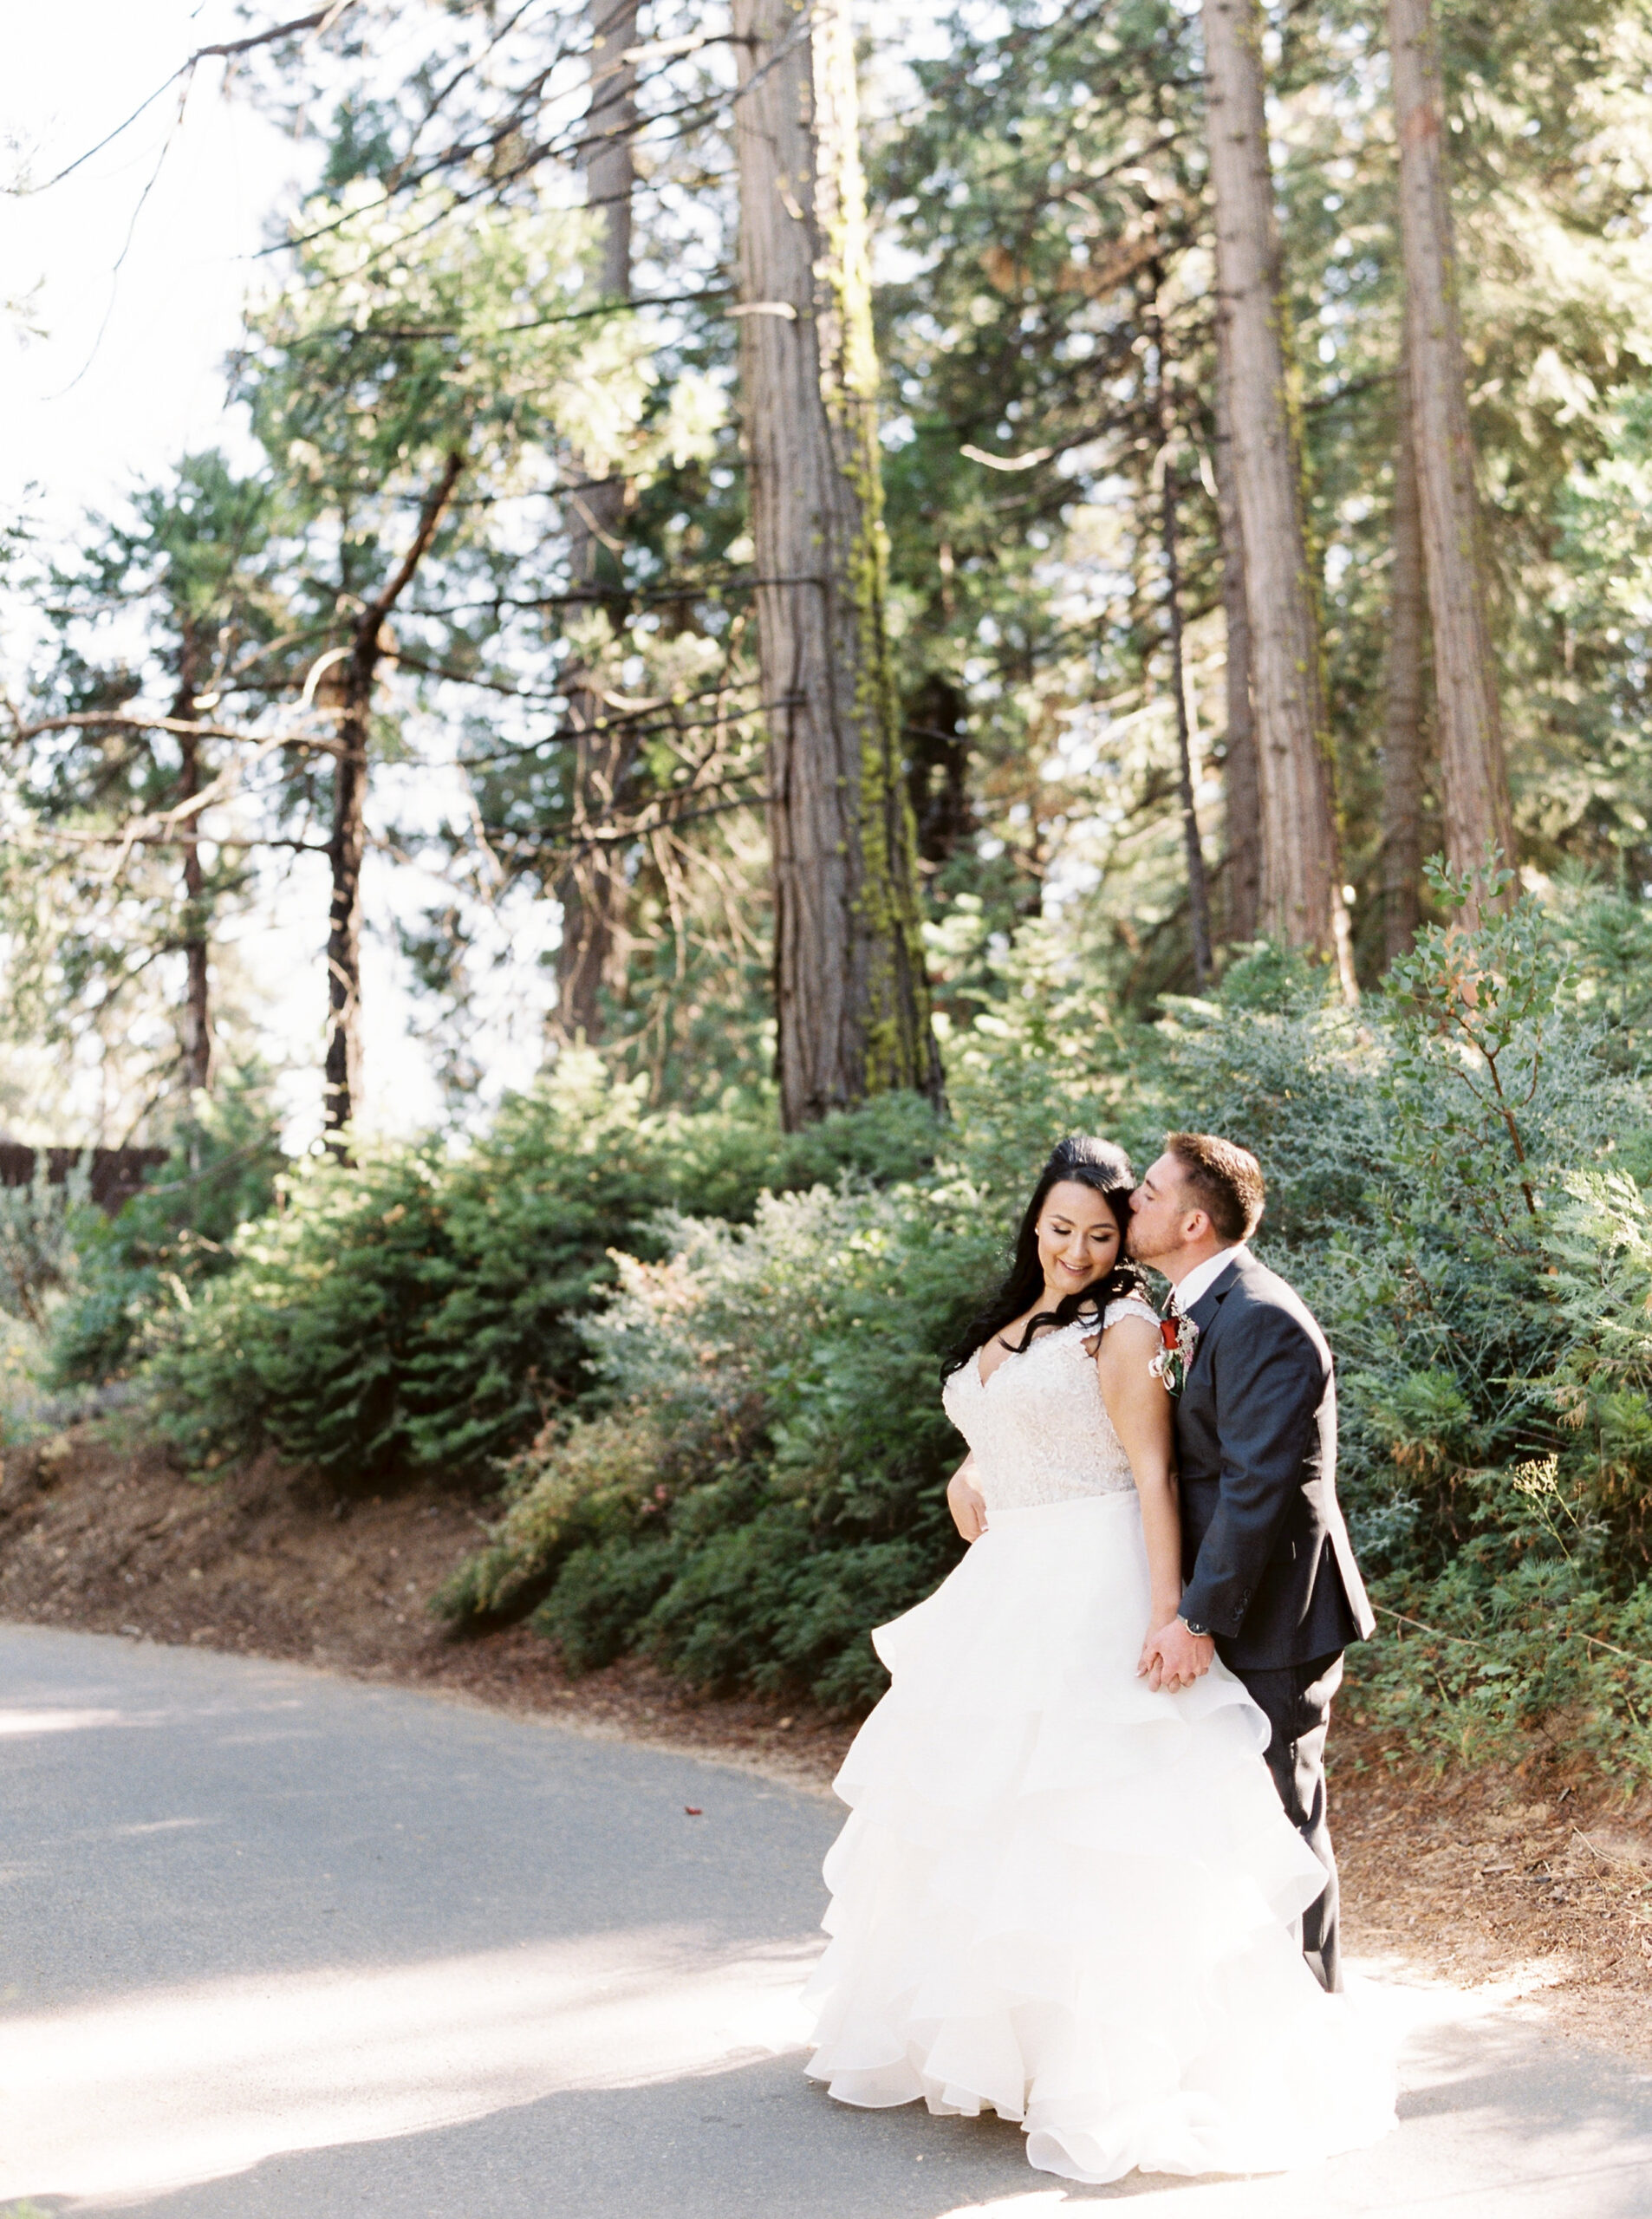 Tenaya-lodge-wedding-at-yosemite-national-park-california-38.jpg